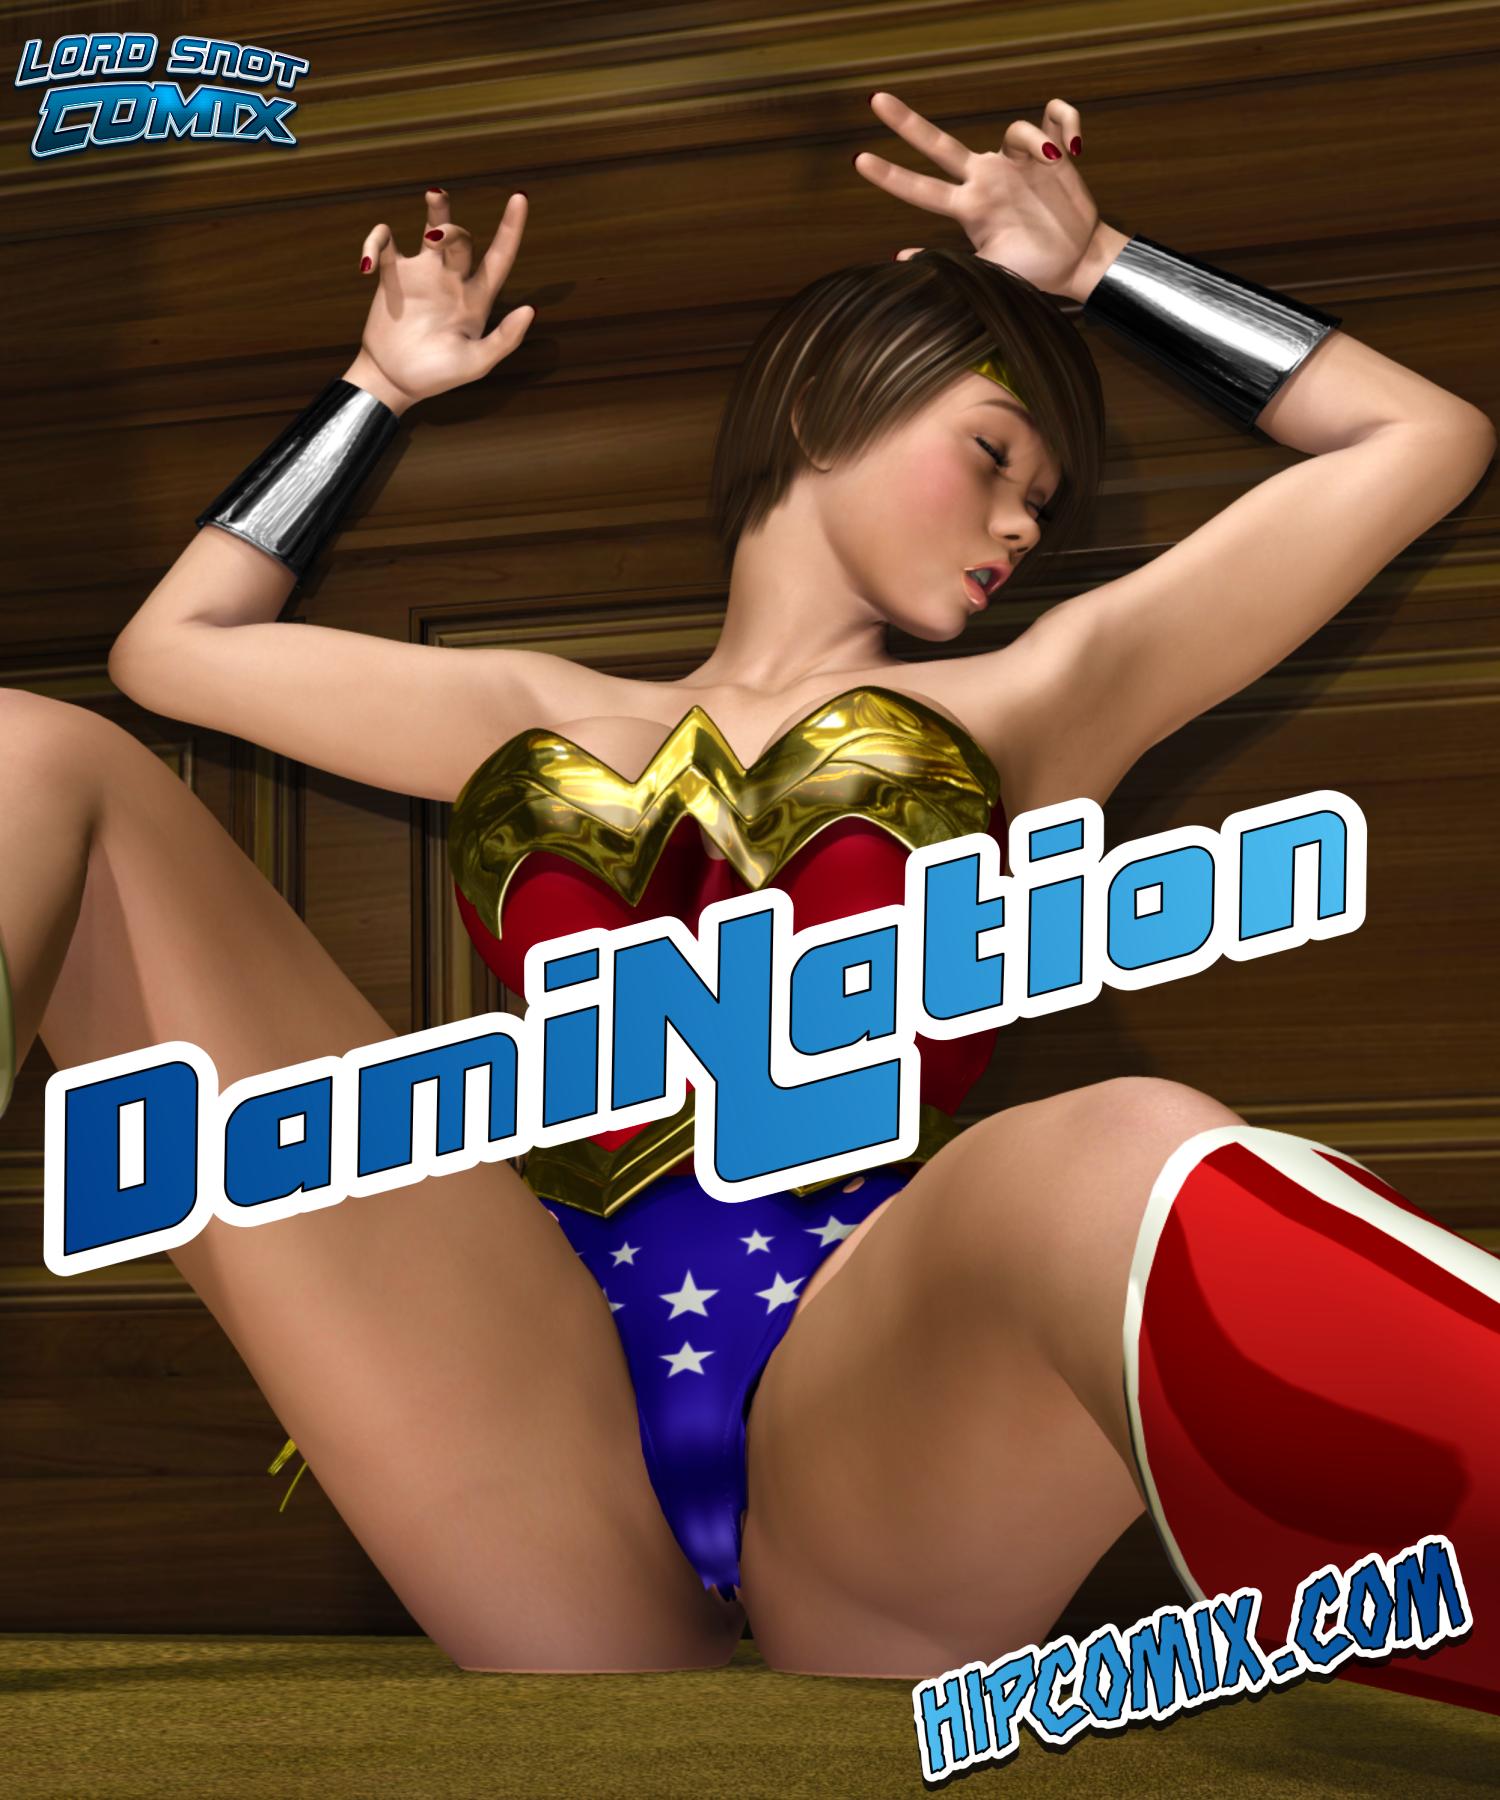 SureFap xxx porno Wonder Woman - [Lord Snot] - DamiNation